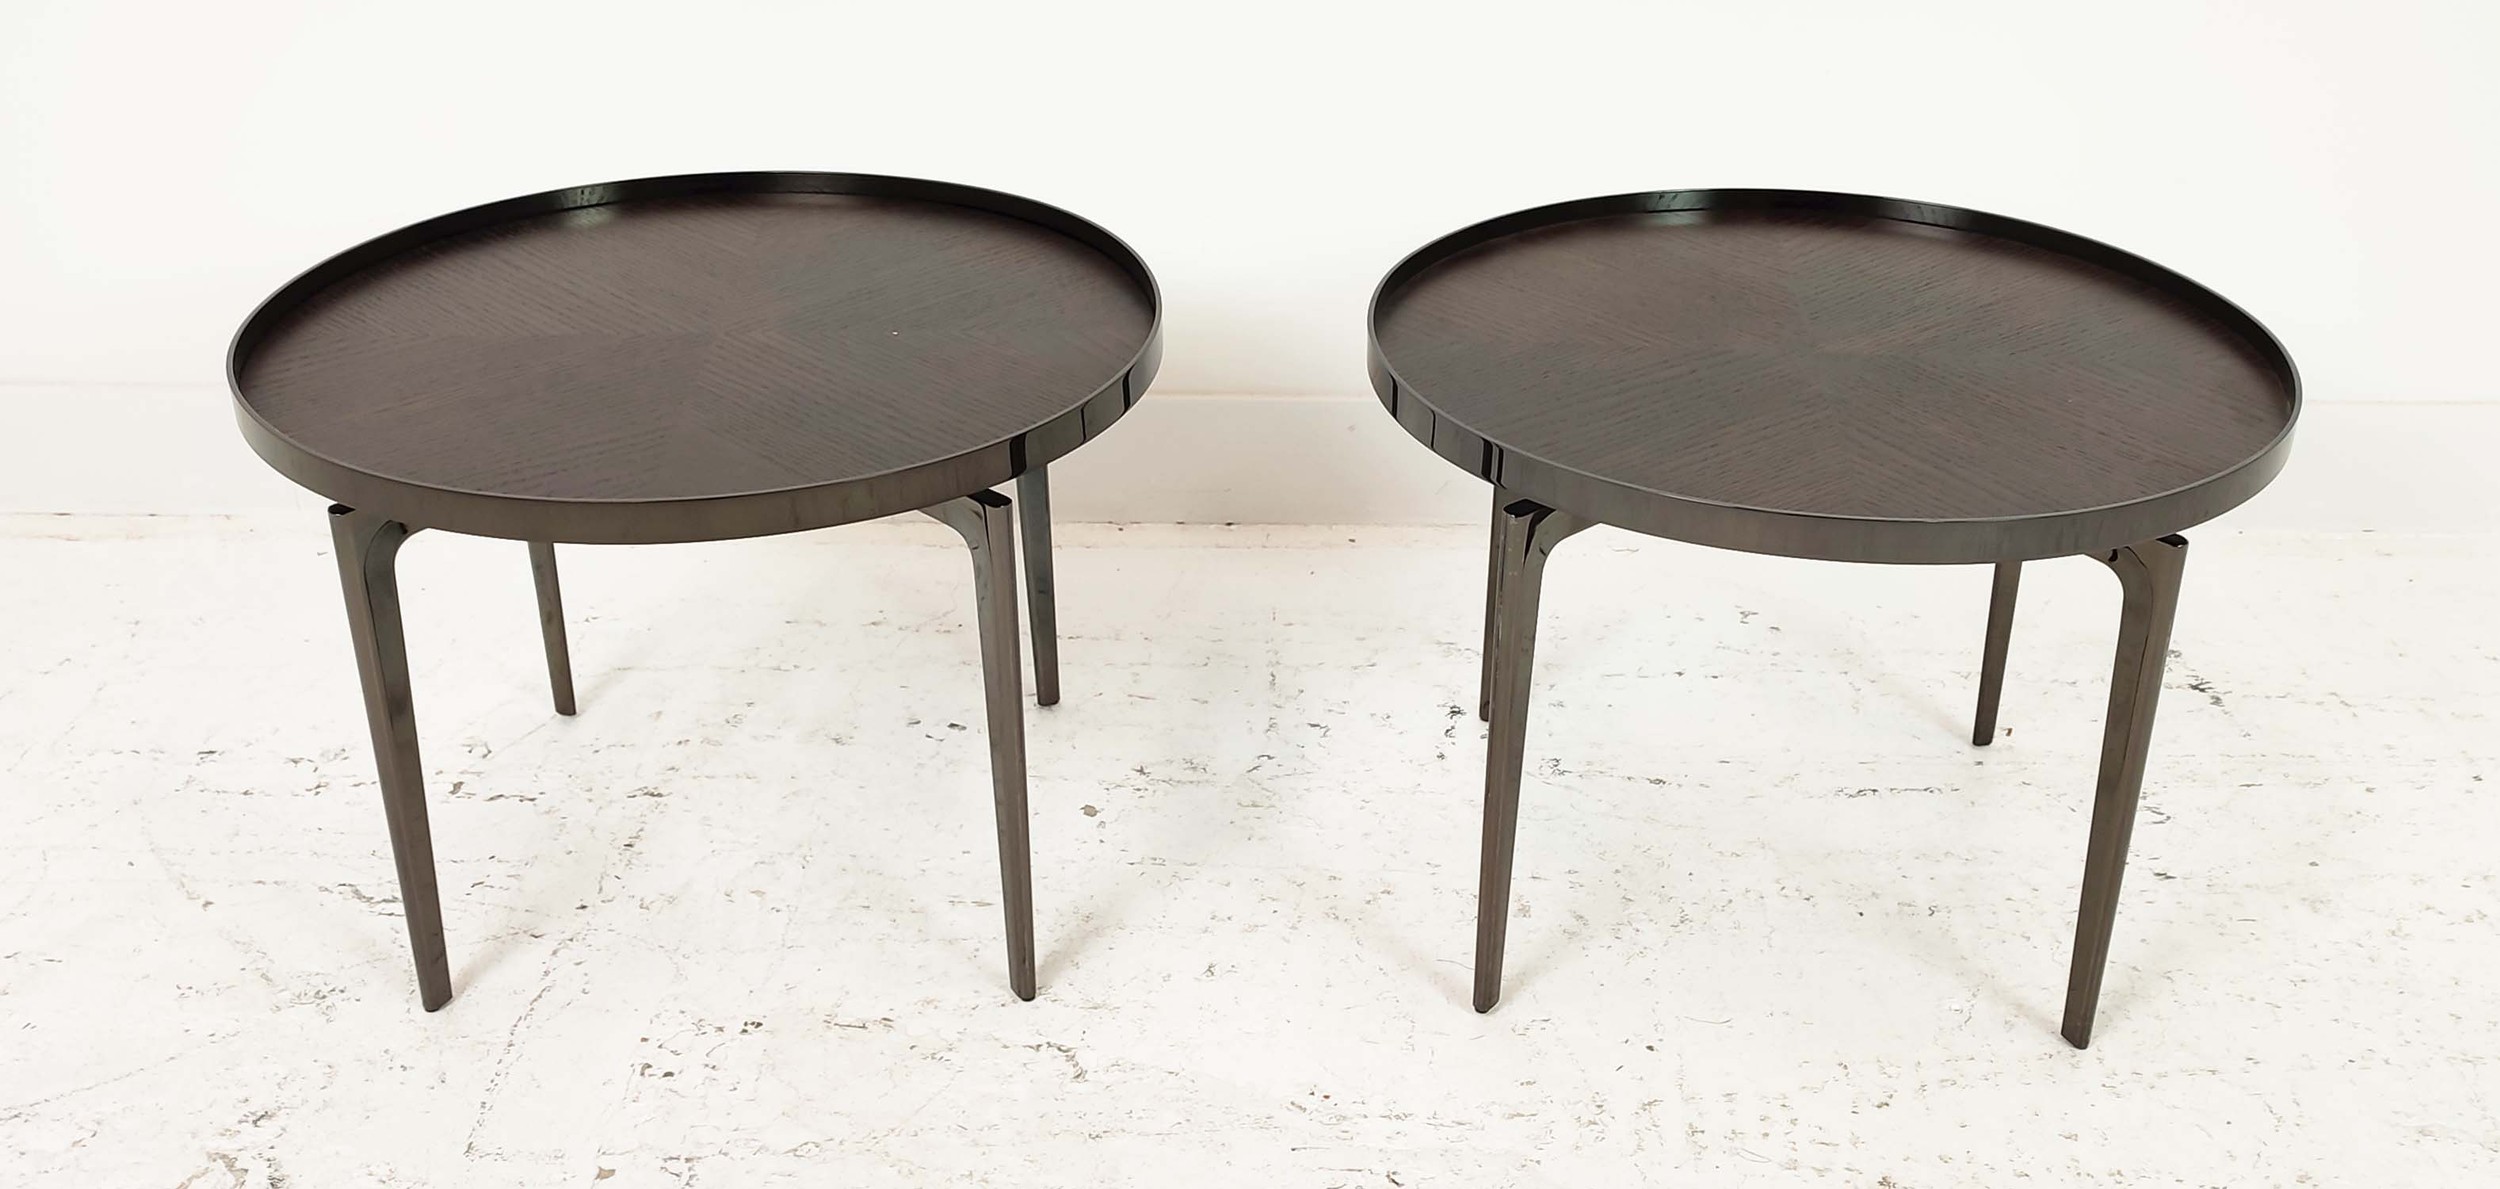 SIDE TABLES, a pair, 1970s Italian style, circular tops, 54.5cm x 39cm. (2)